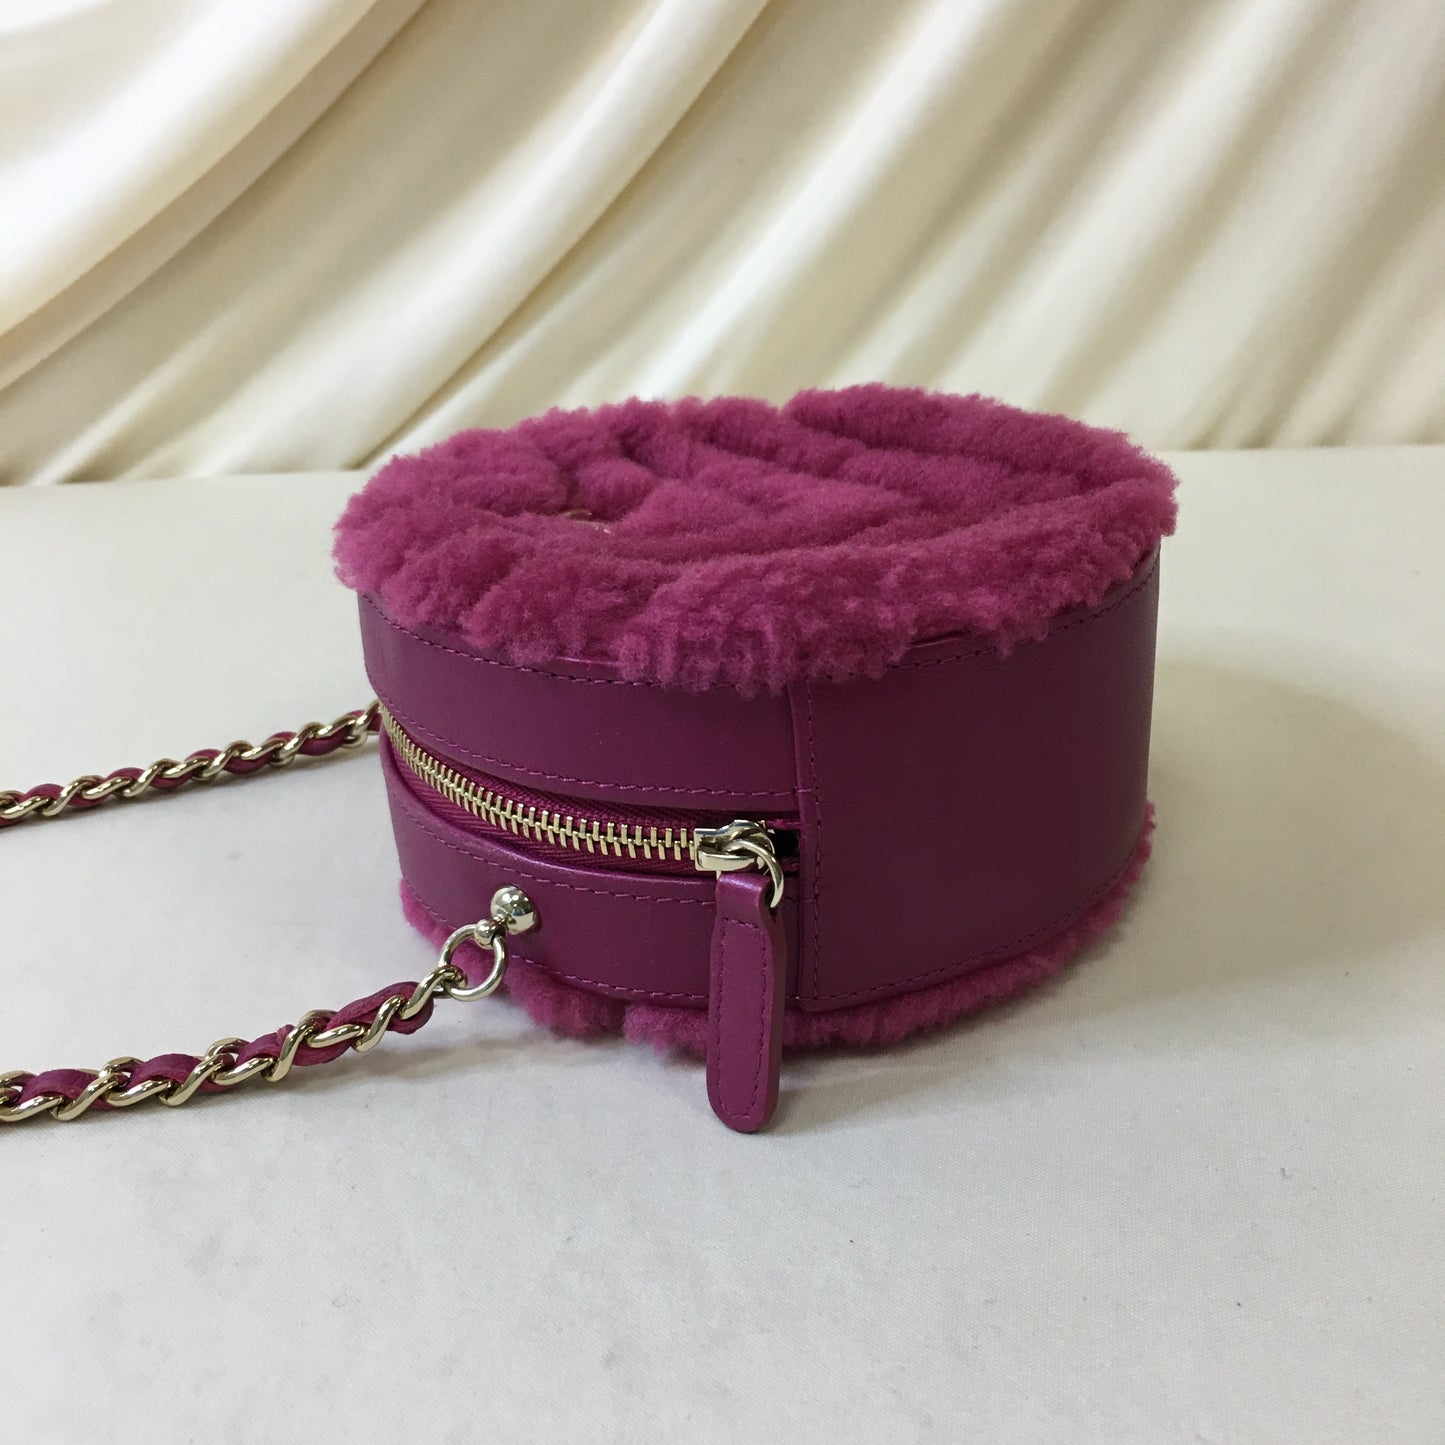 Chanel Pink Chevron Shearling Mini Round Clutch with Chain Sku# 66972